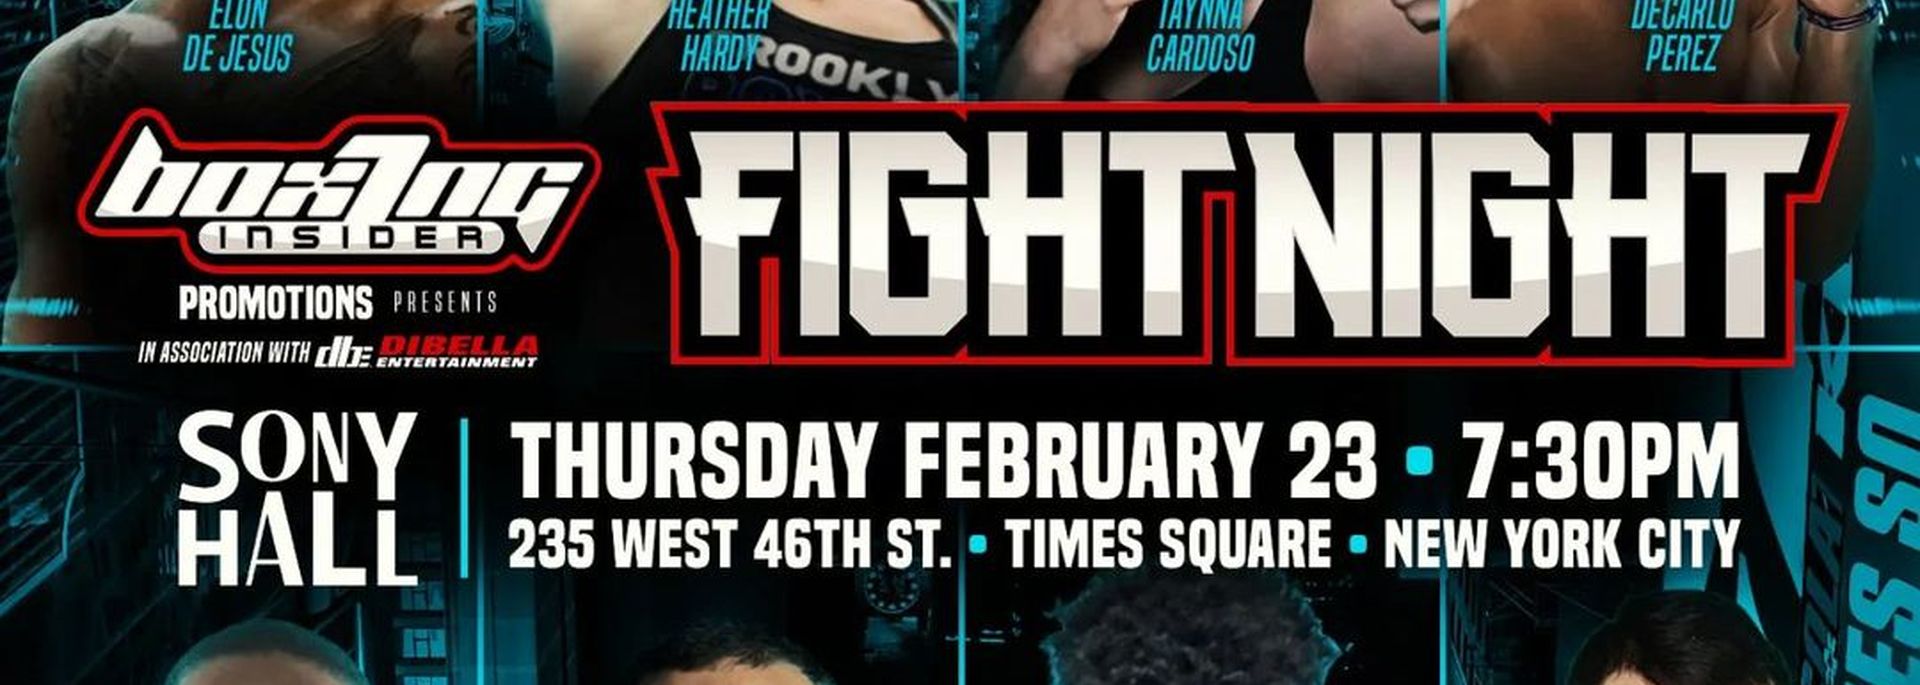 Boxing Insider - Fight Night